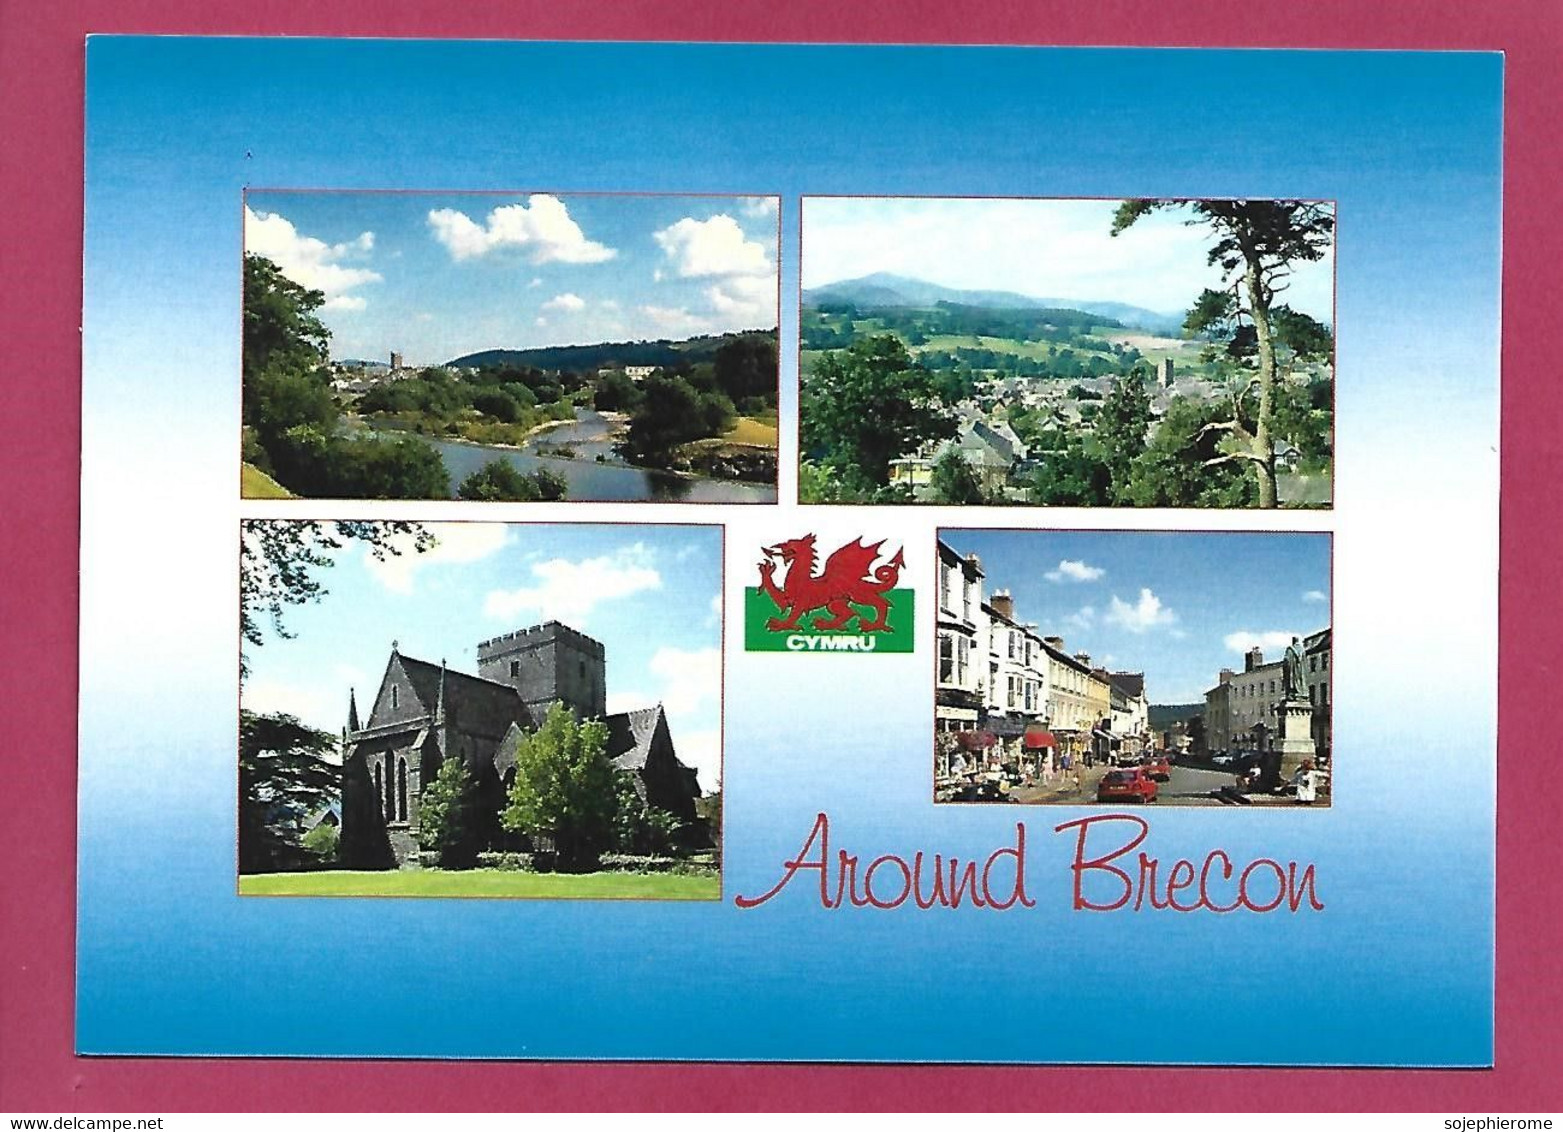 Around Brecon (Breconshire) 2scans - Breconshire